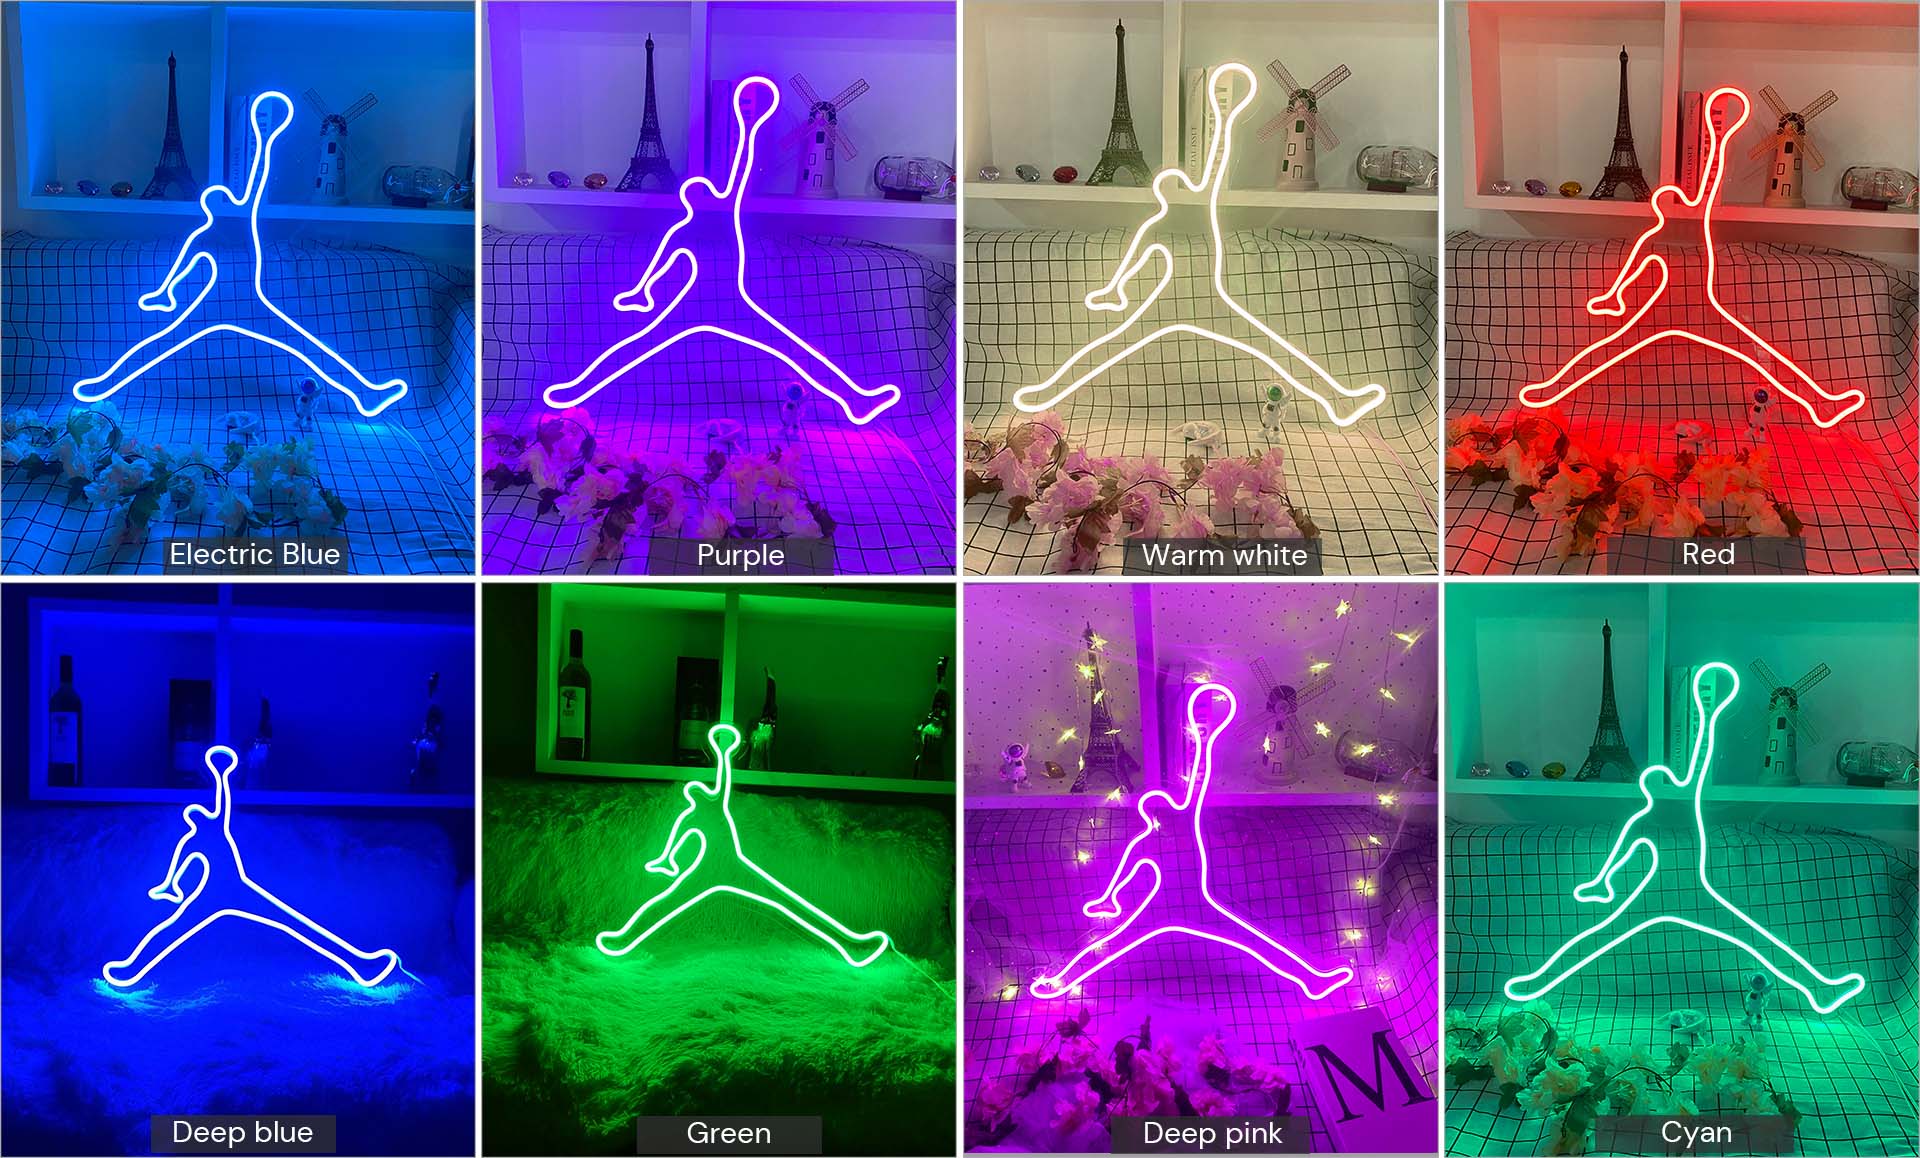 Jordan model basketball dunk neon sign